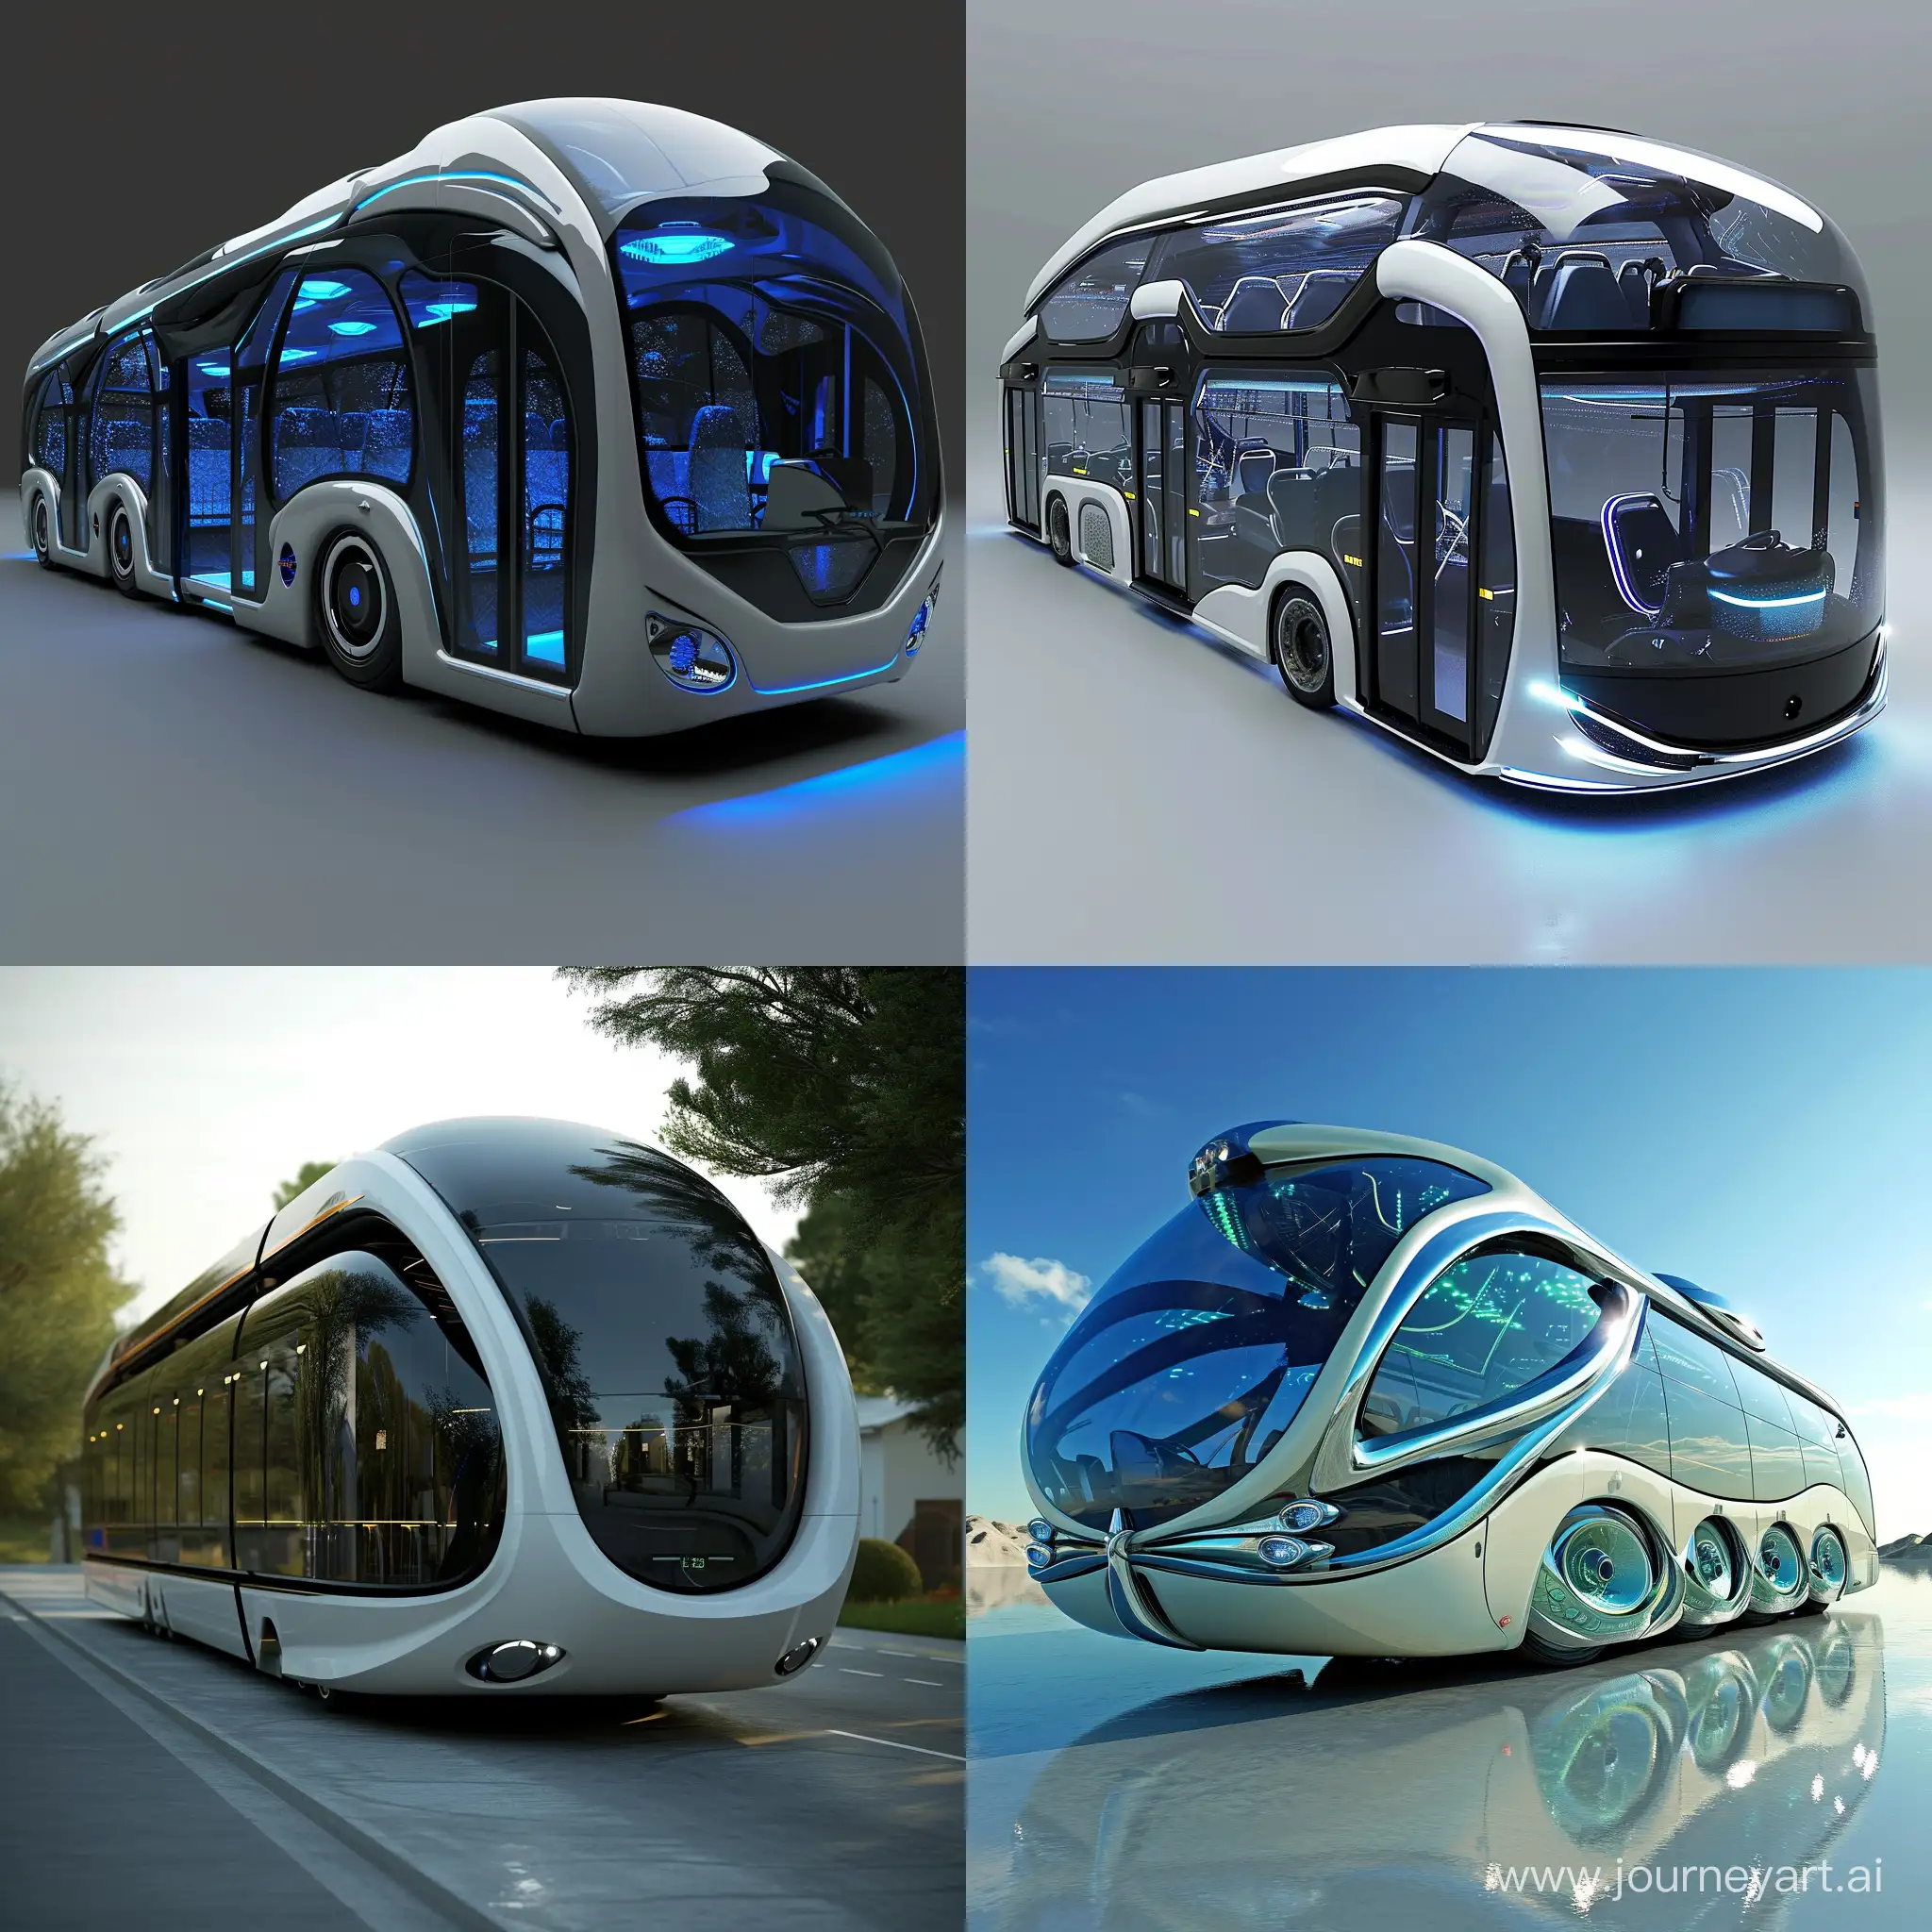 Futuristic-Advanced-Bus-in-HighTech-Urban-Environment